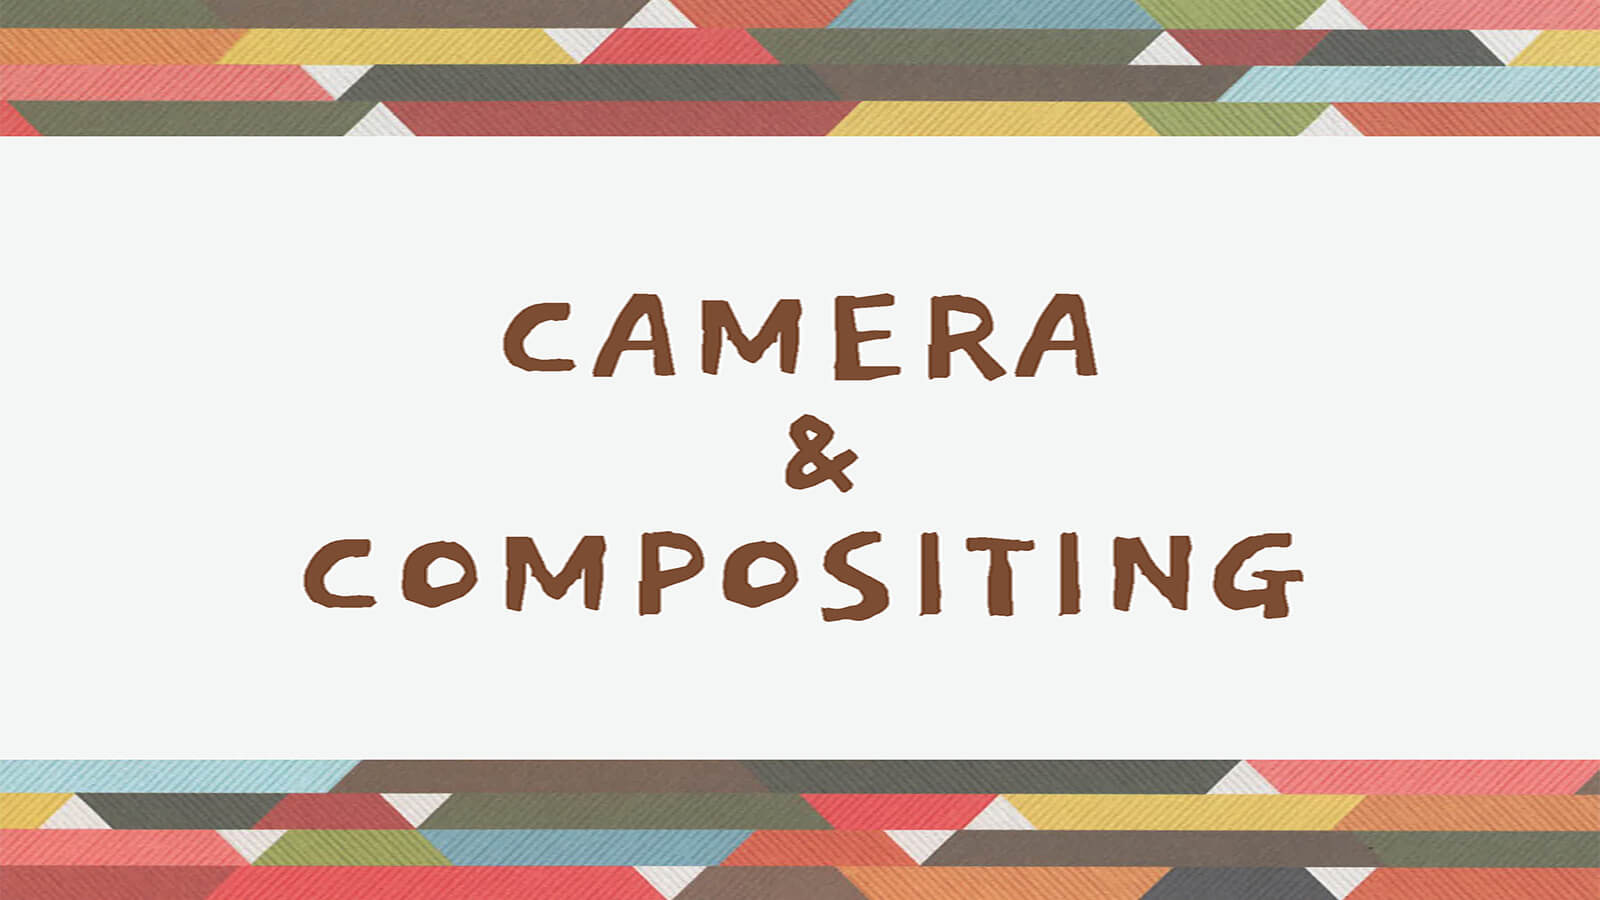 Slide reading "Camera &amp; Compositing"